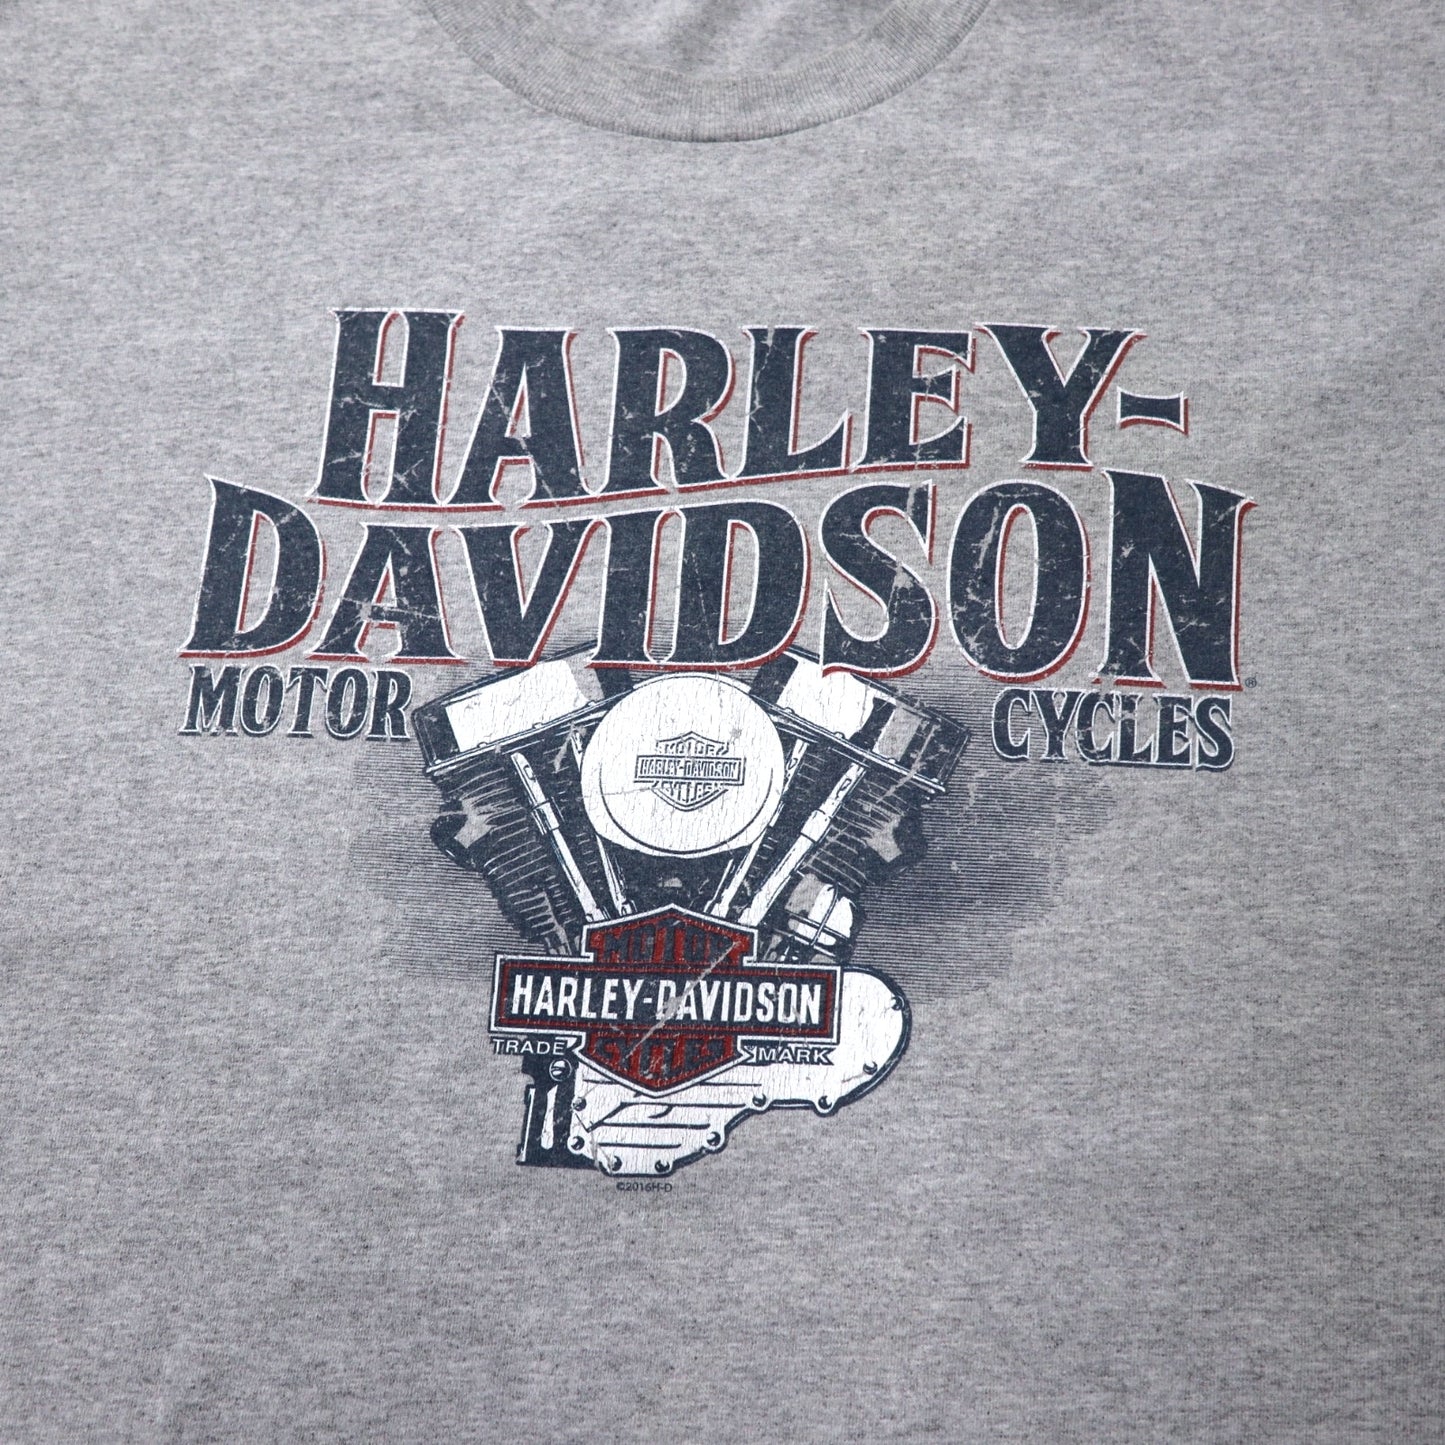 HARLEY DAVIDSON ロゴプリント Tシャツ XL グレー コットン 両面プリント BEDFORD, TEXAS